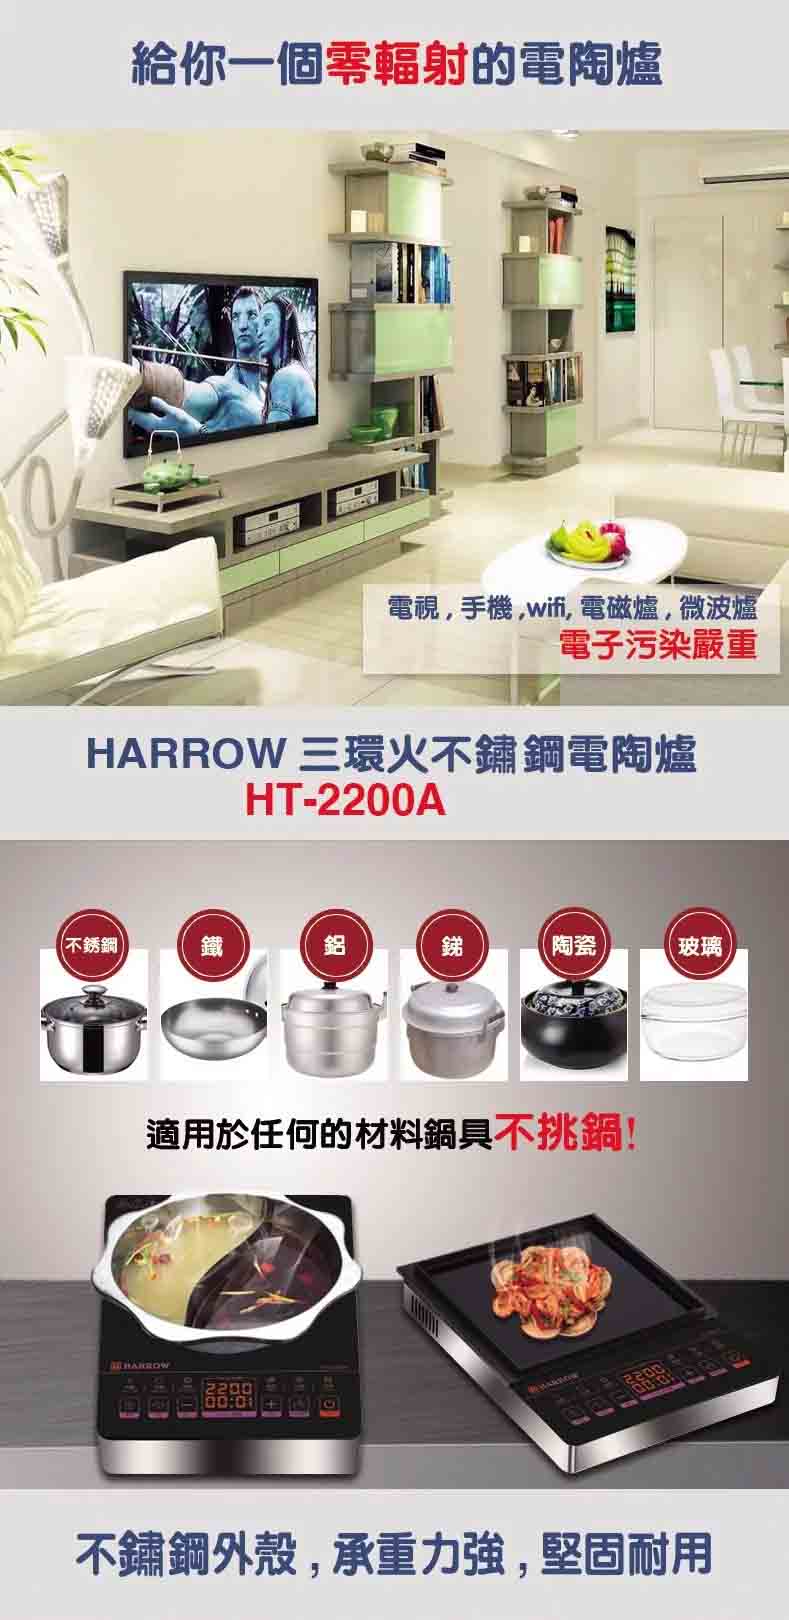 Harrow HT-2200A 三環火不鏽鋼電陶爐 | 韓式烤盤玻璃鐵板燒